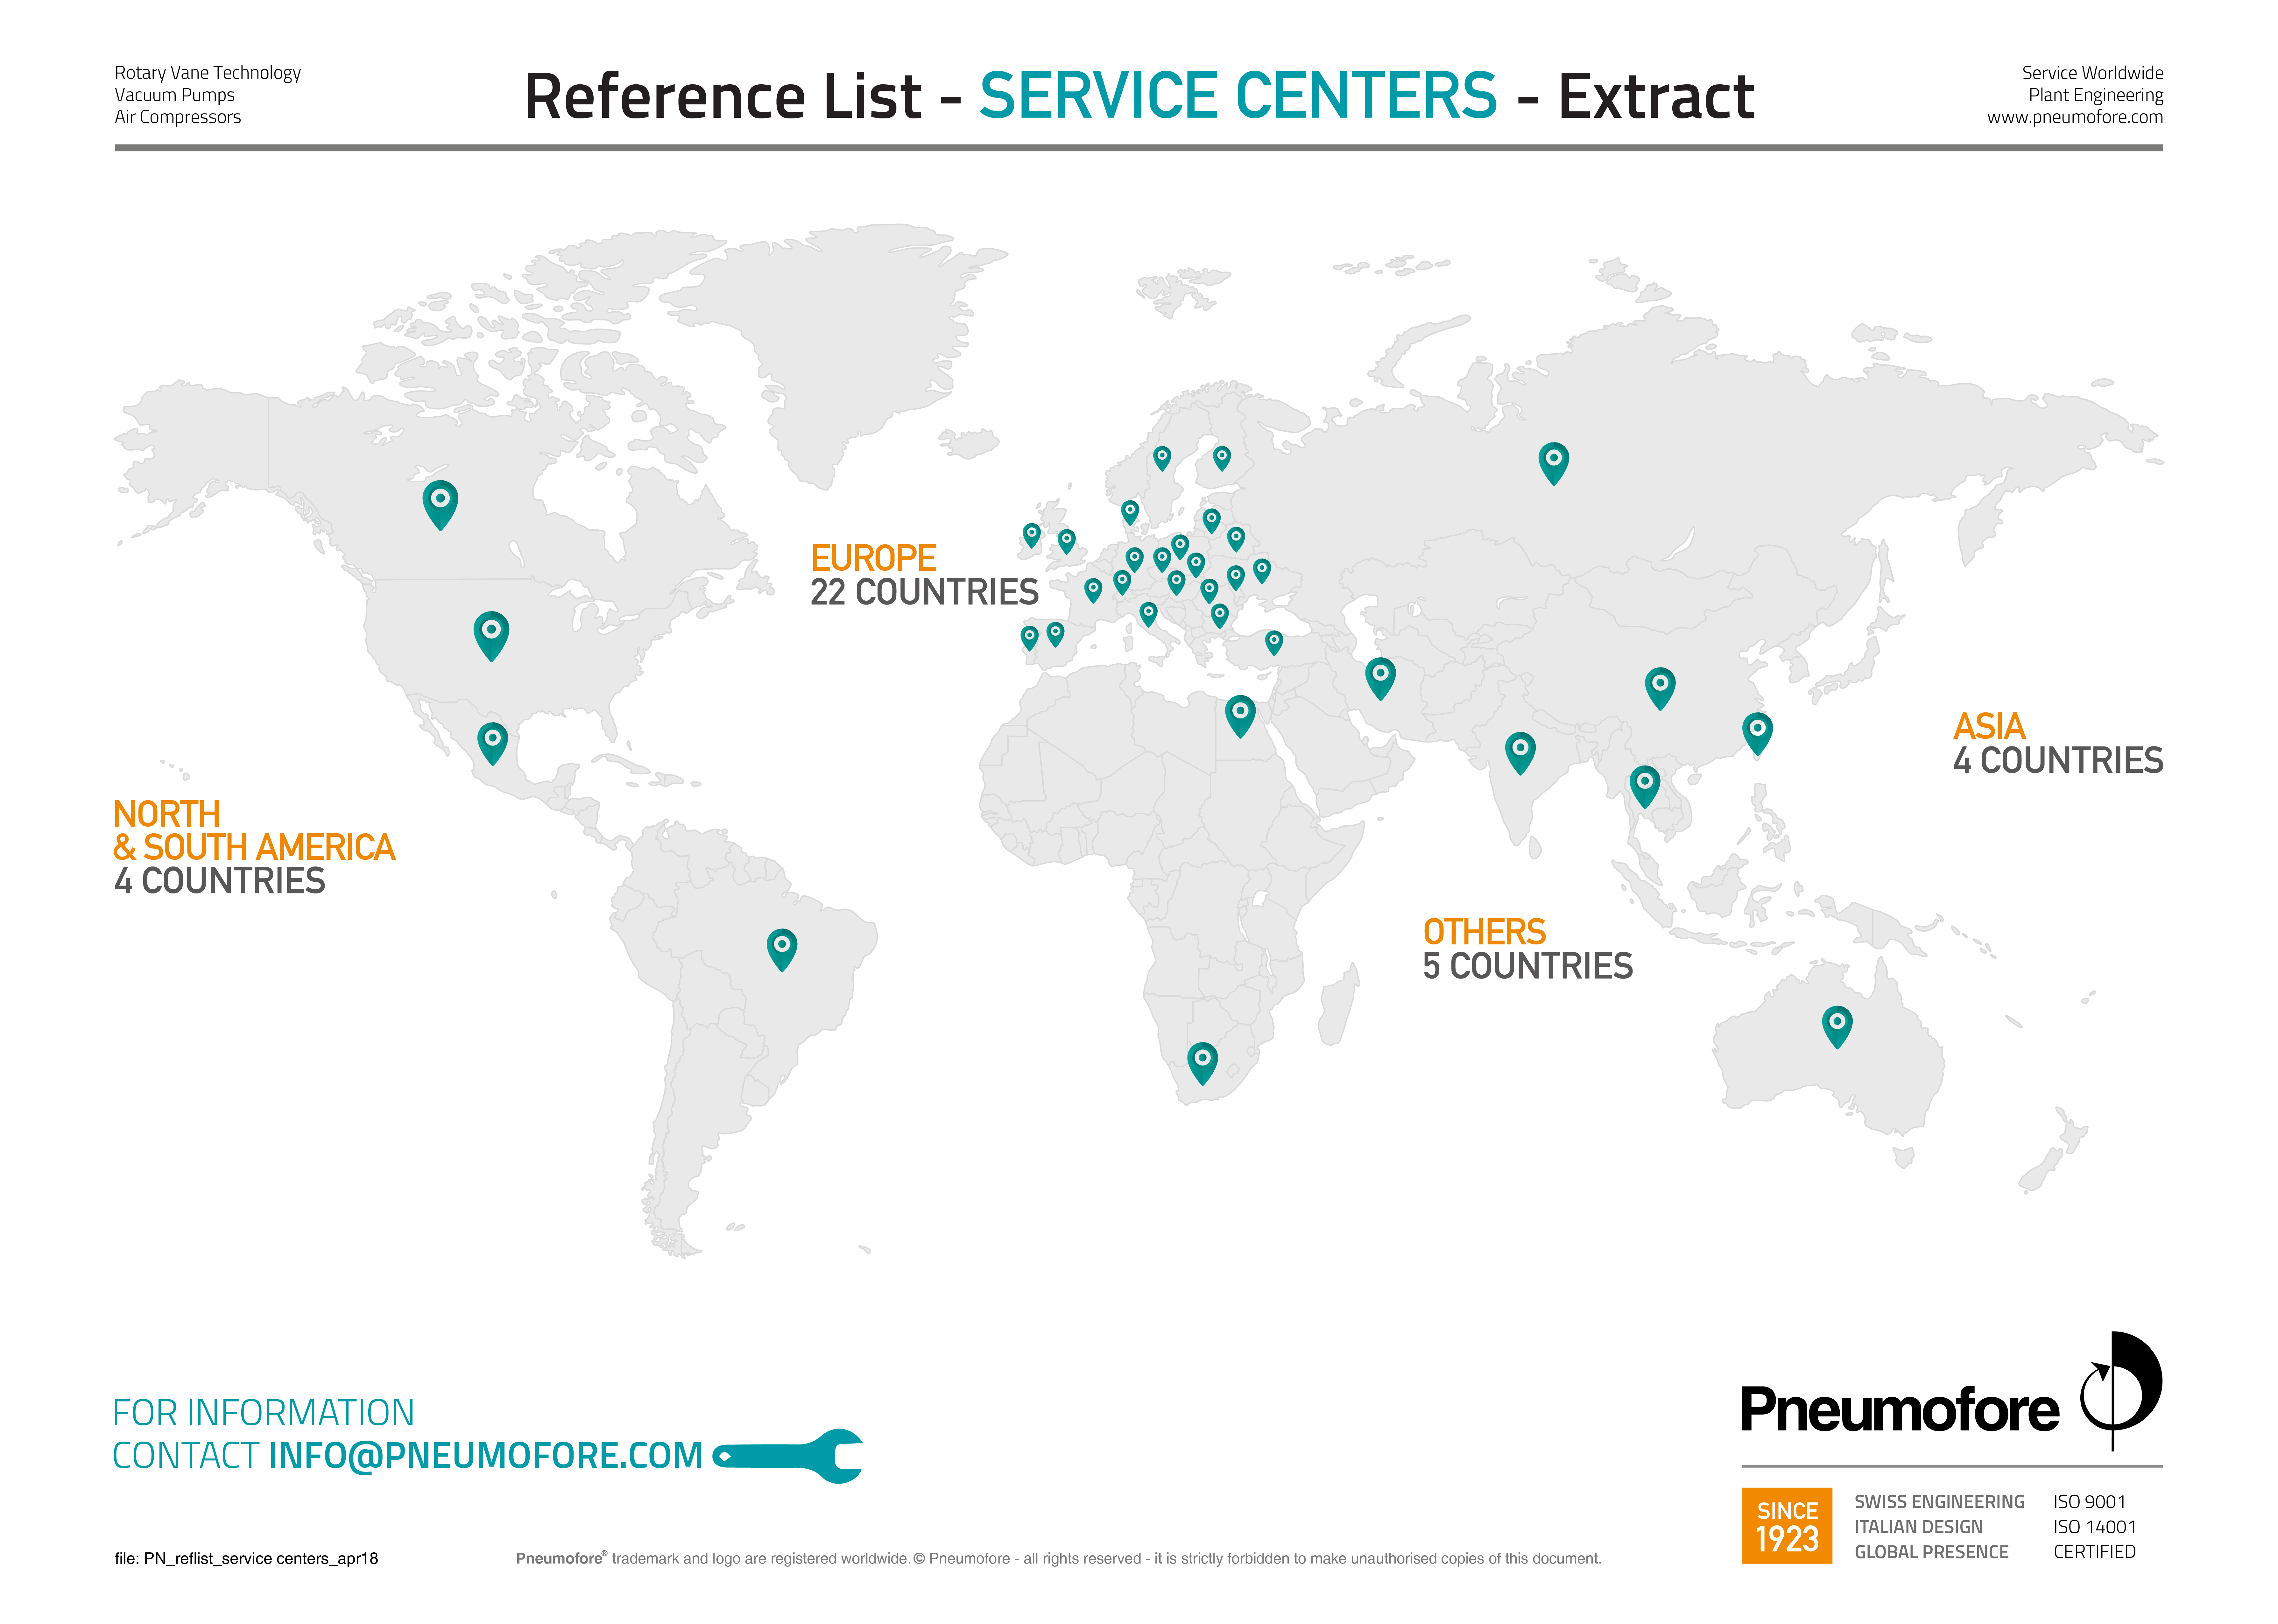 Pneumofore Worldwide Service Centers - 2018